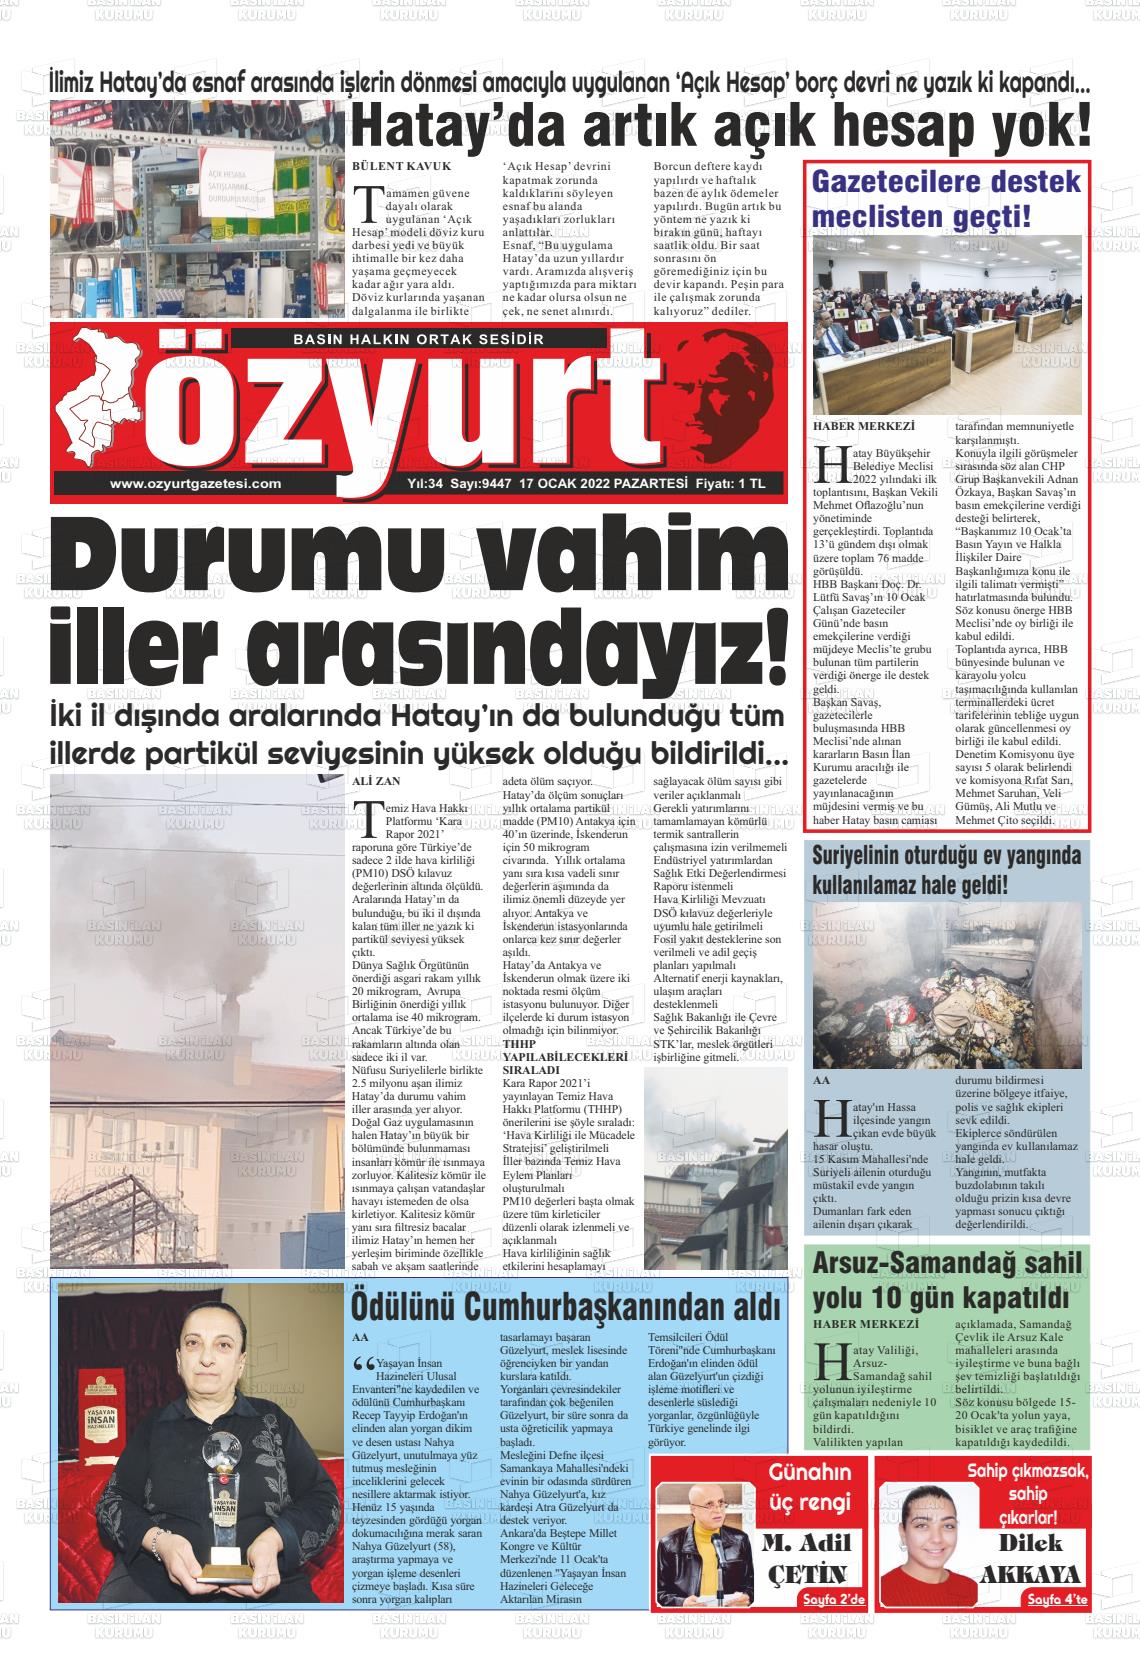 17 Ocak 2022 Özyurt Gazete Manşeti